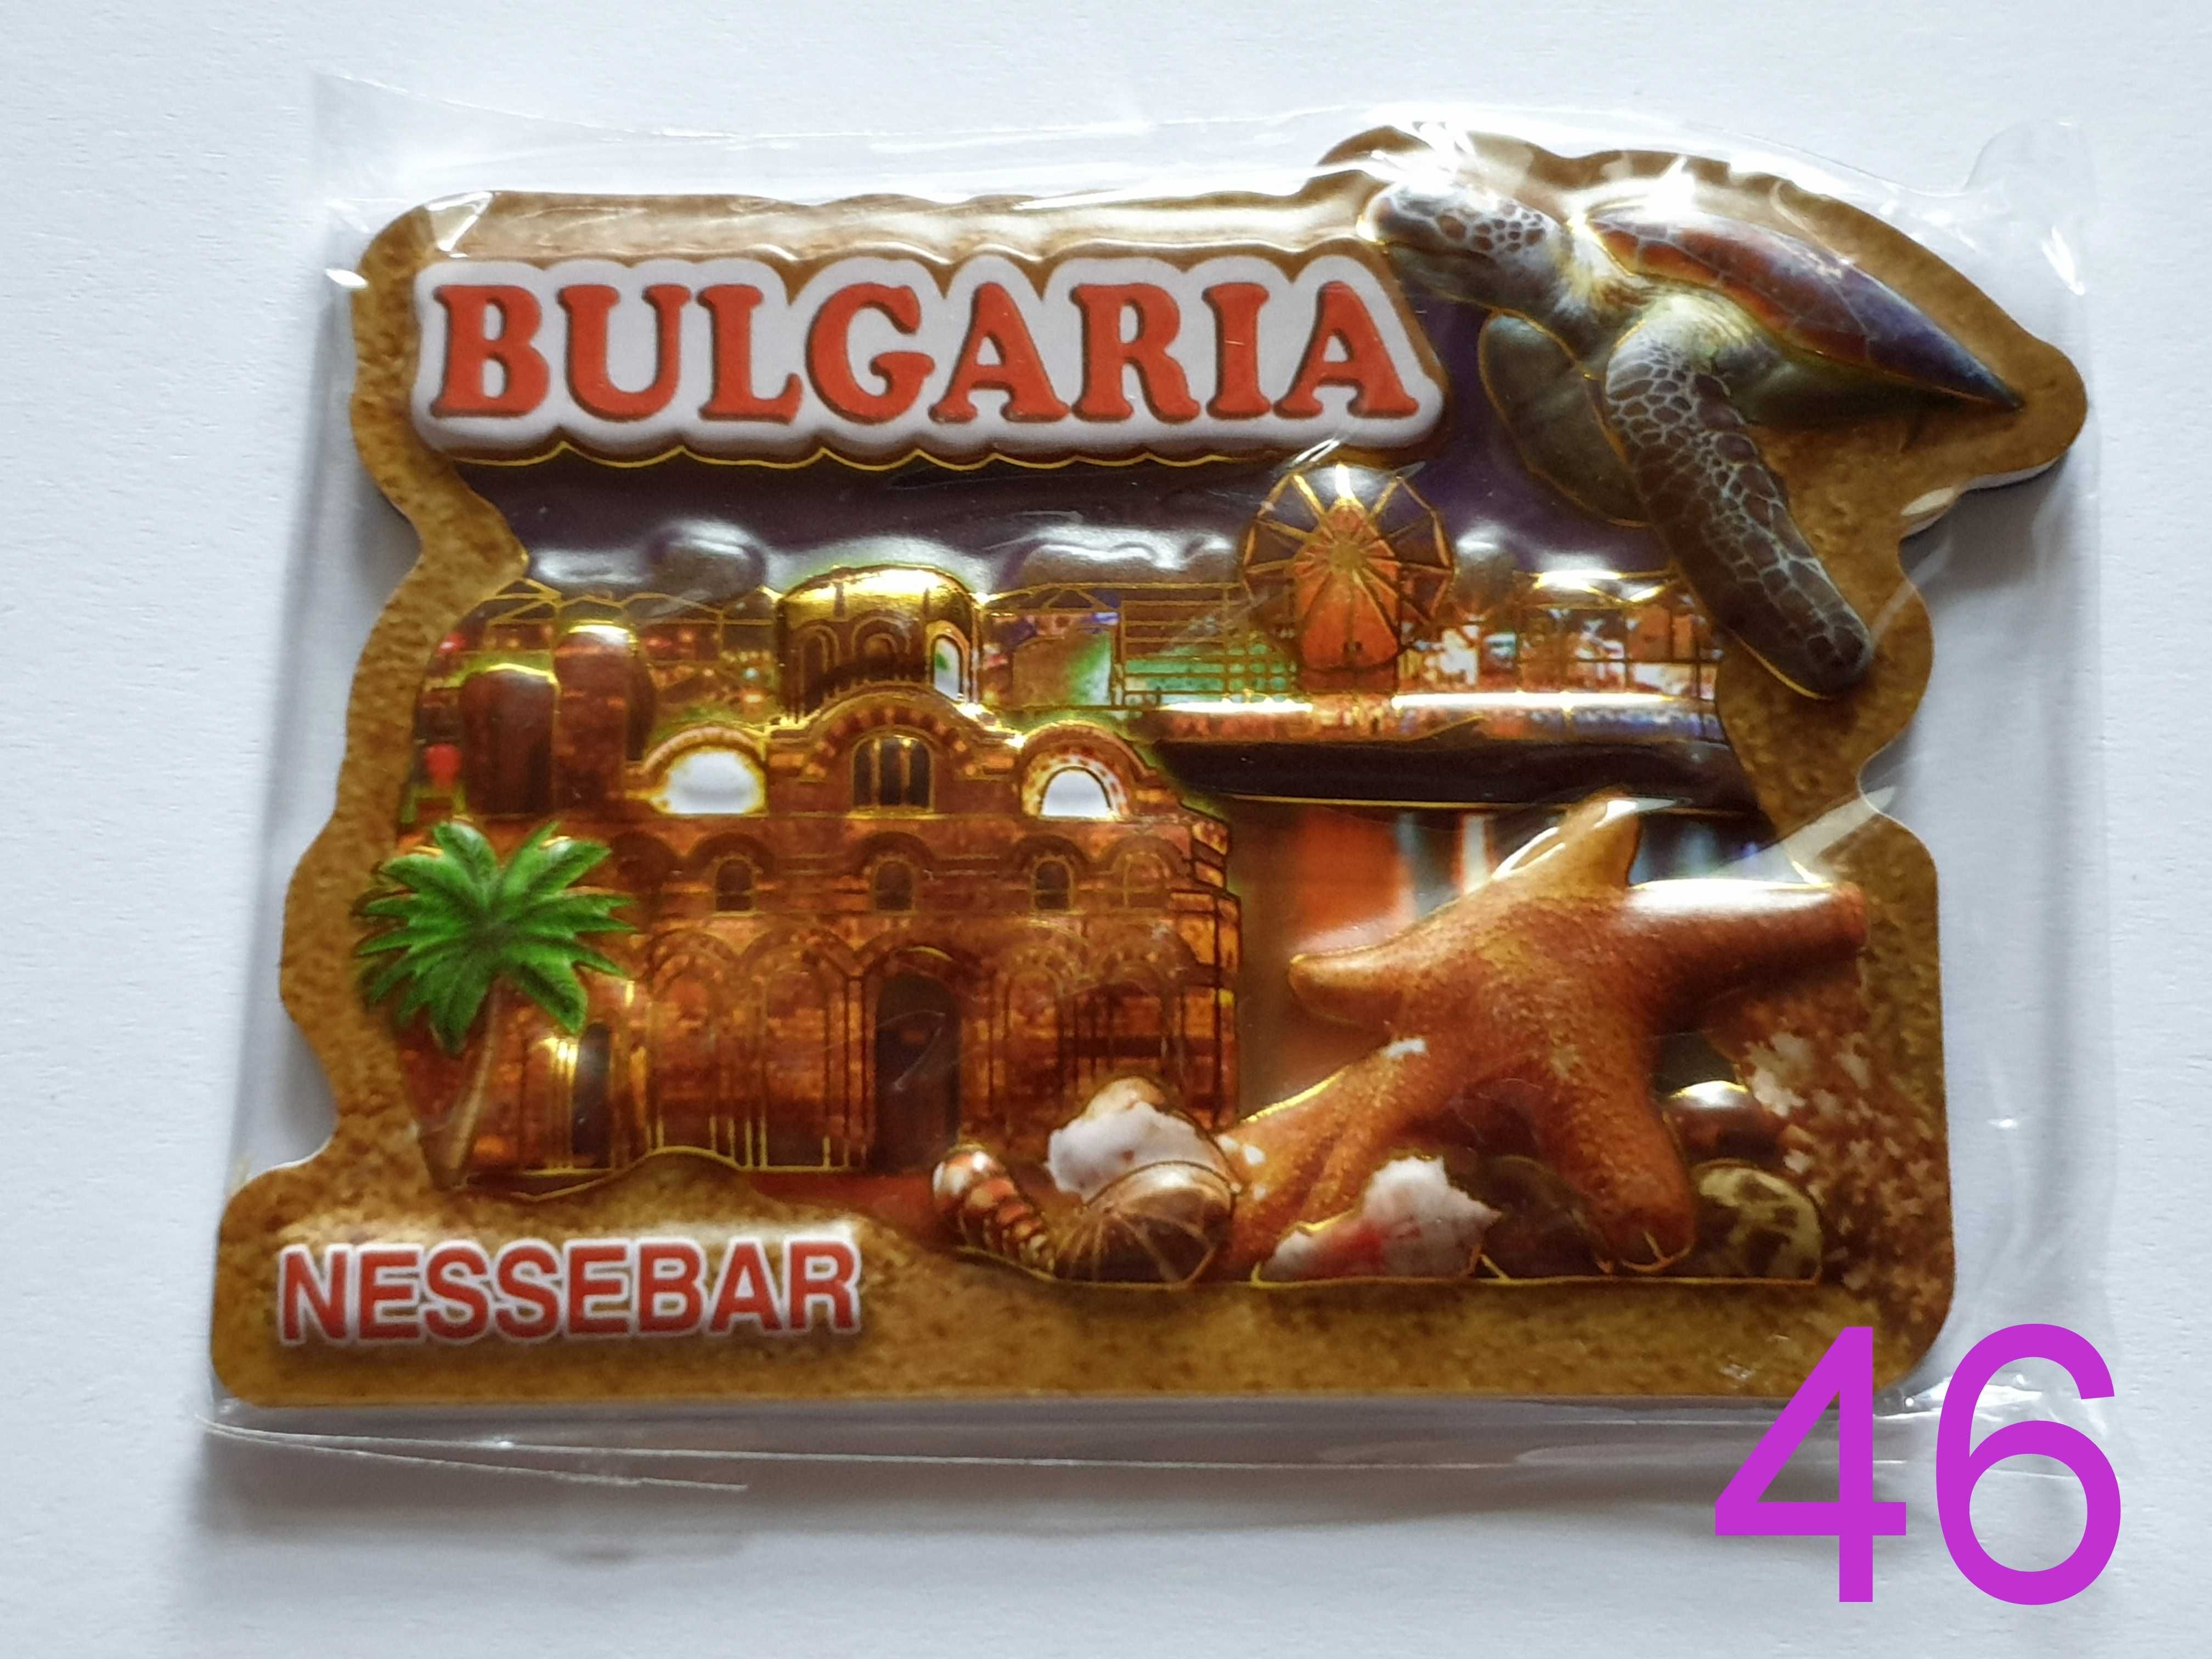 Bułgaria , Bulgaria - Magnes na lodówkę - wzór 46